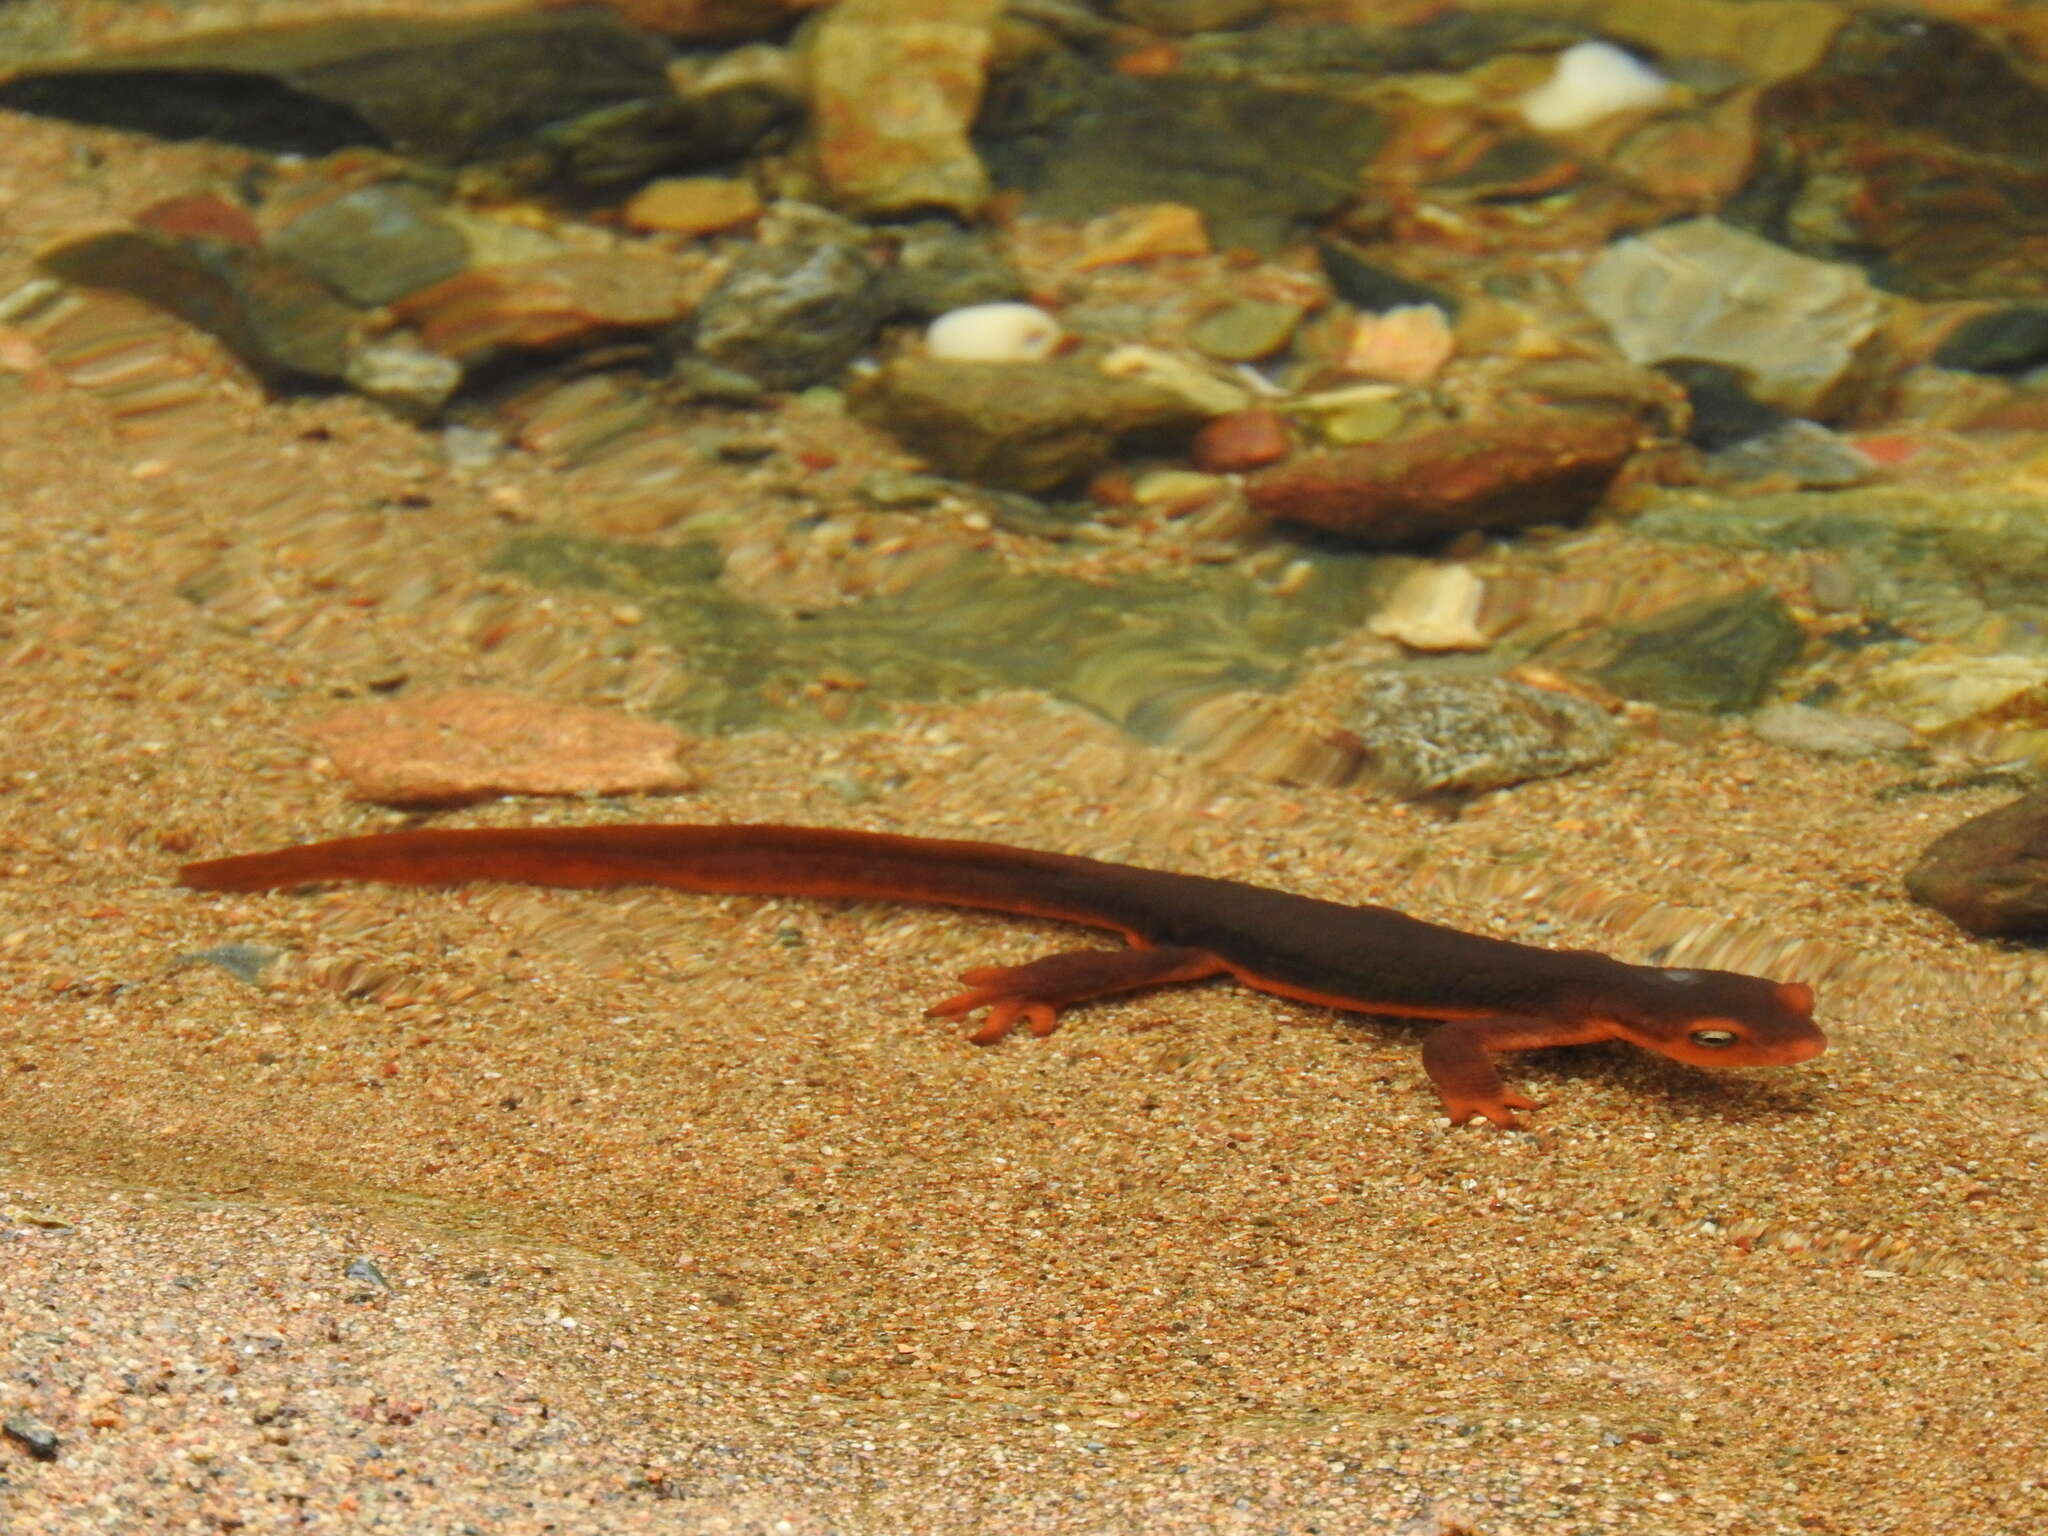 Image of Sierra newt